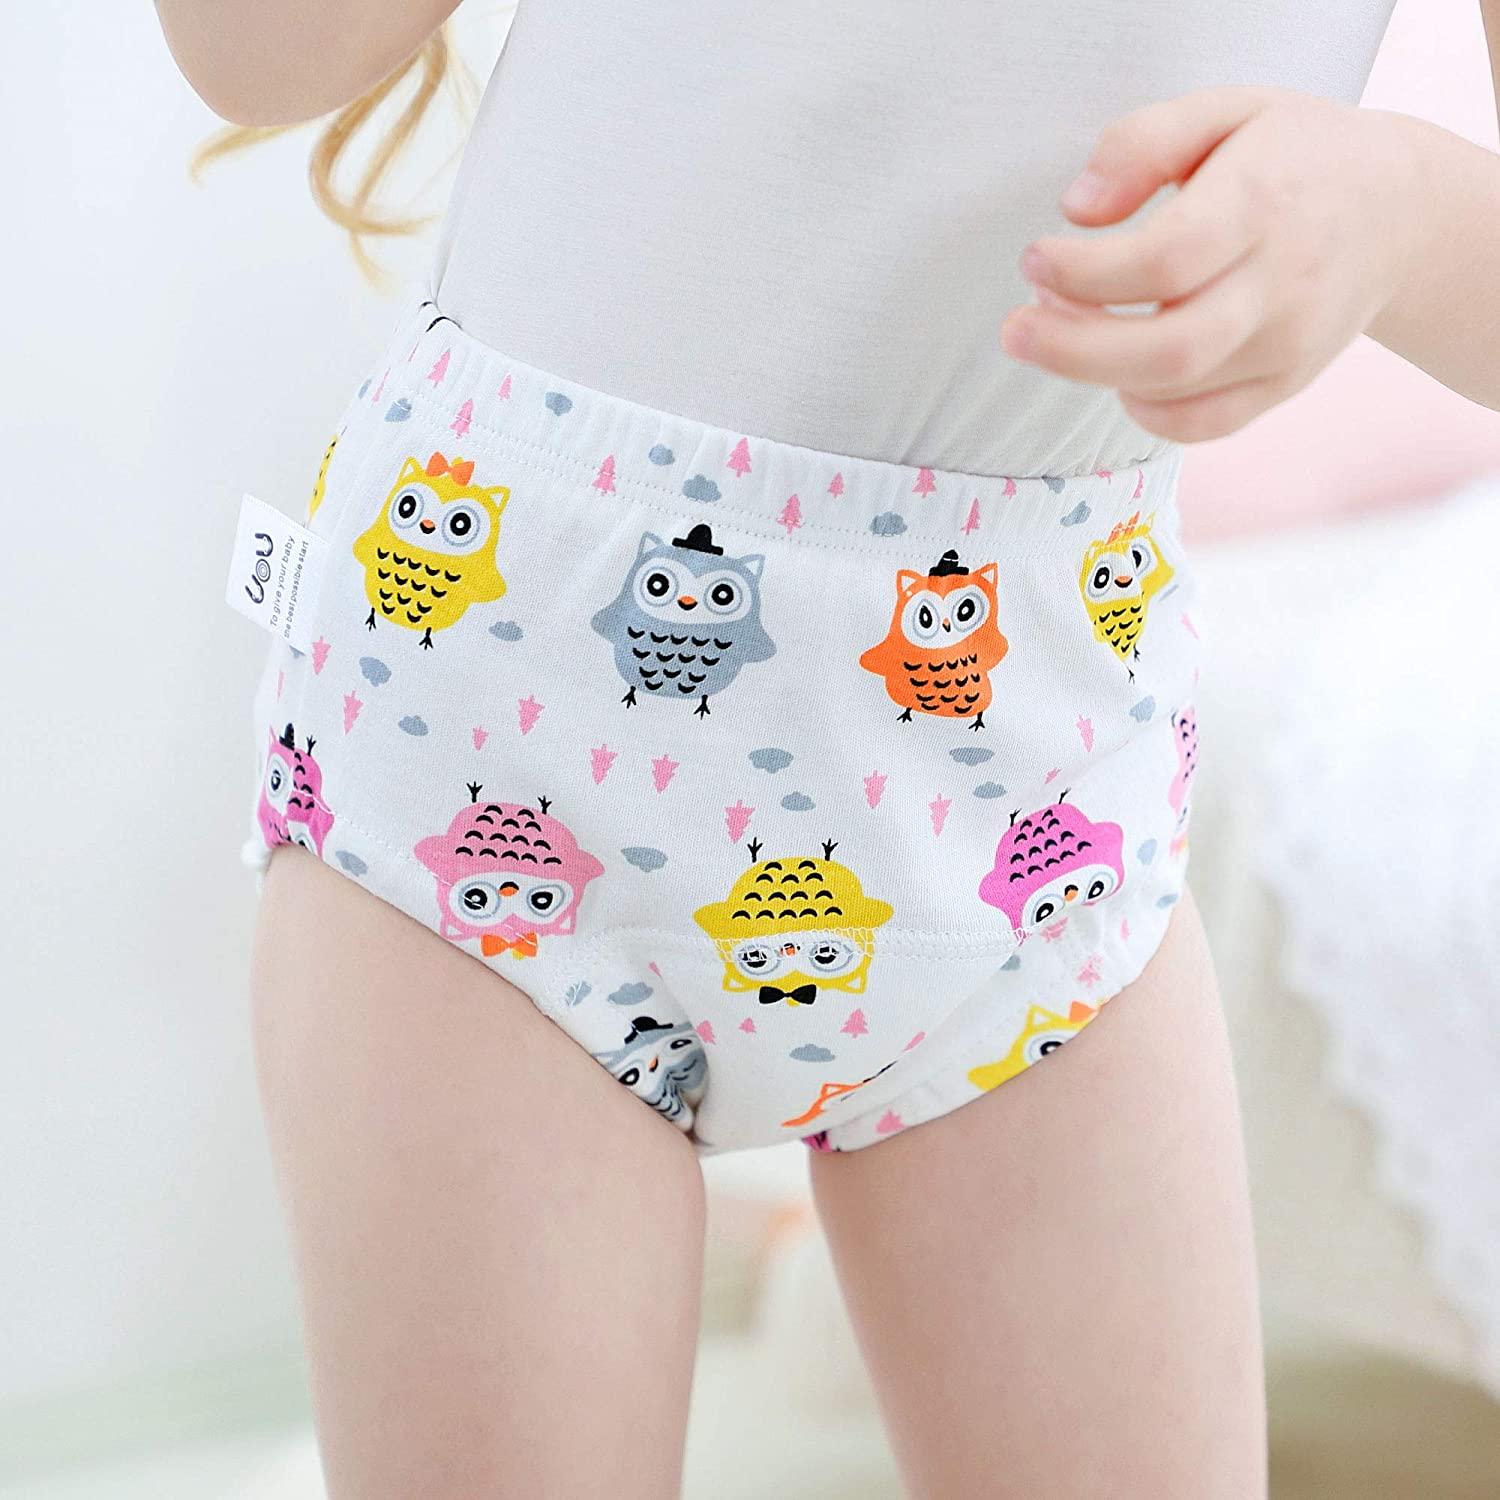 Toddler Potty Training Pants 4 Pack,Cotton Training Underwear Size  2T,3T,4T,Waterproof Underwear for Kids Pink 4T